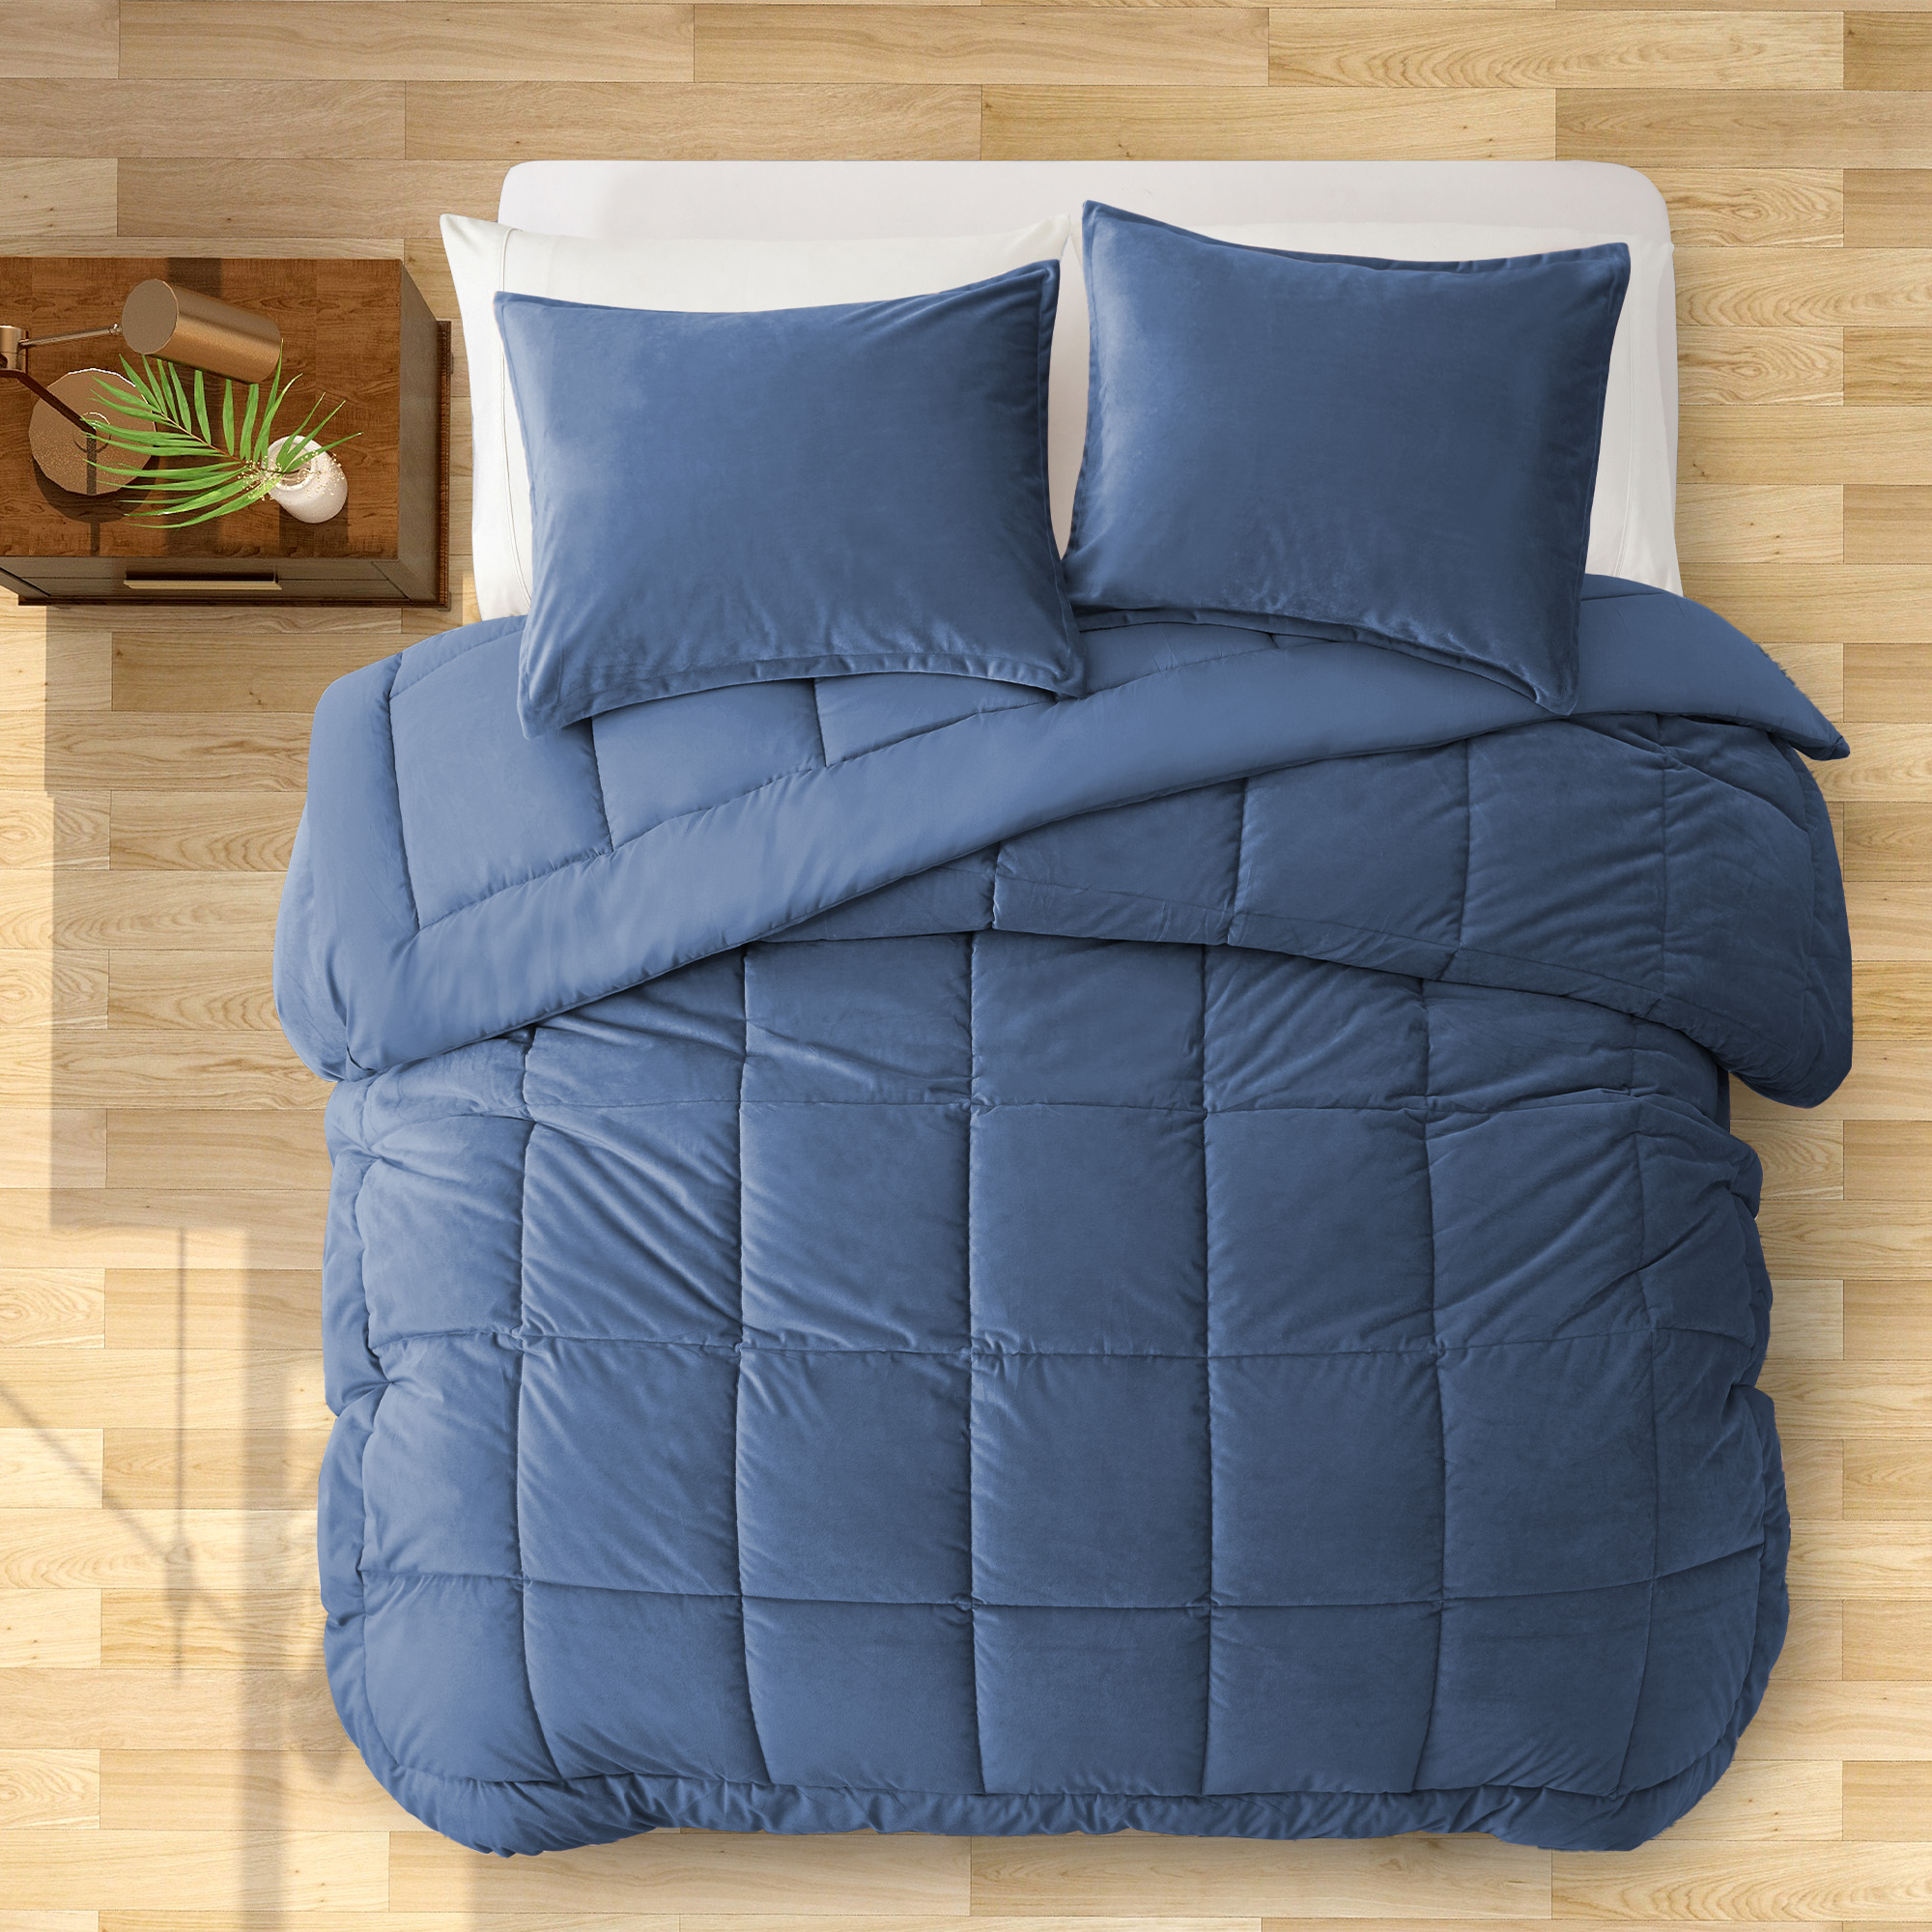 2 Or 3 Pieces Luxury Ultra Soft Velvet Solid Duvet Set-All Season Reversible Down Alternative Comforter Set - King Size